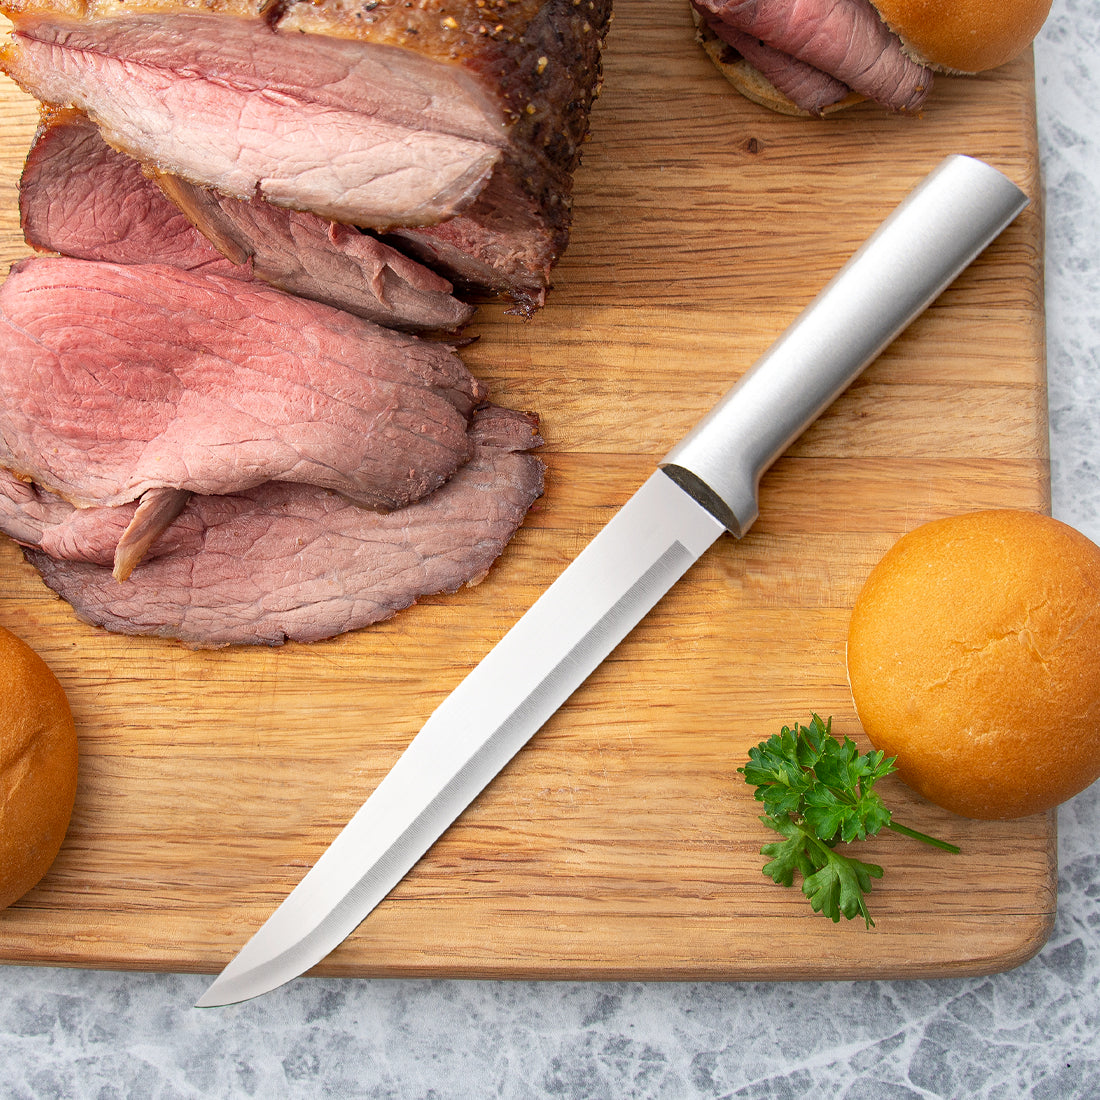 Rada Cutlery Slicer on a cutting board with sliced meat.